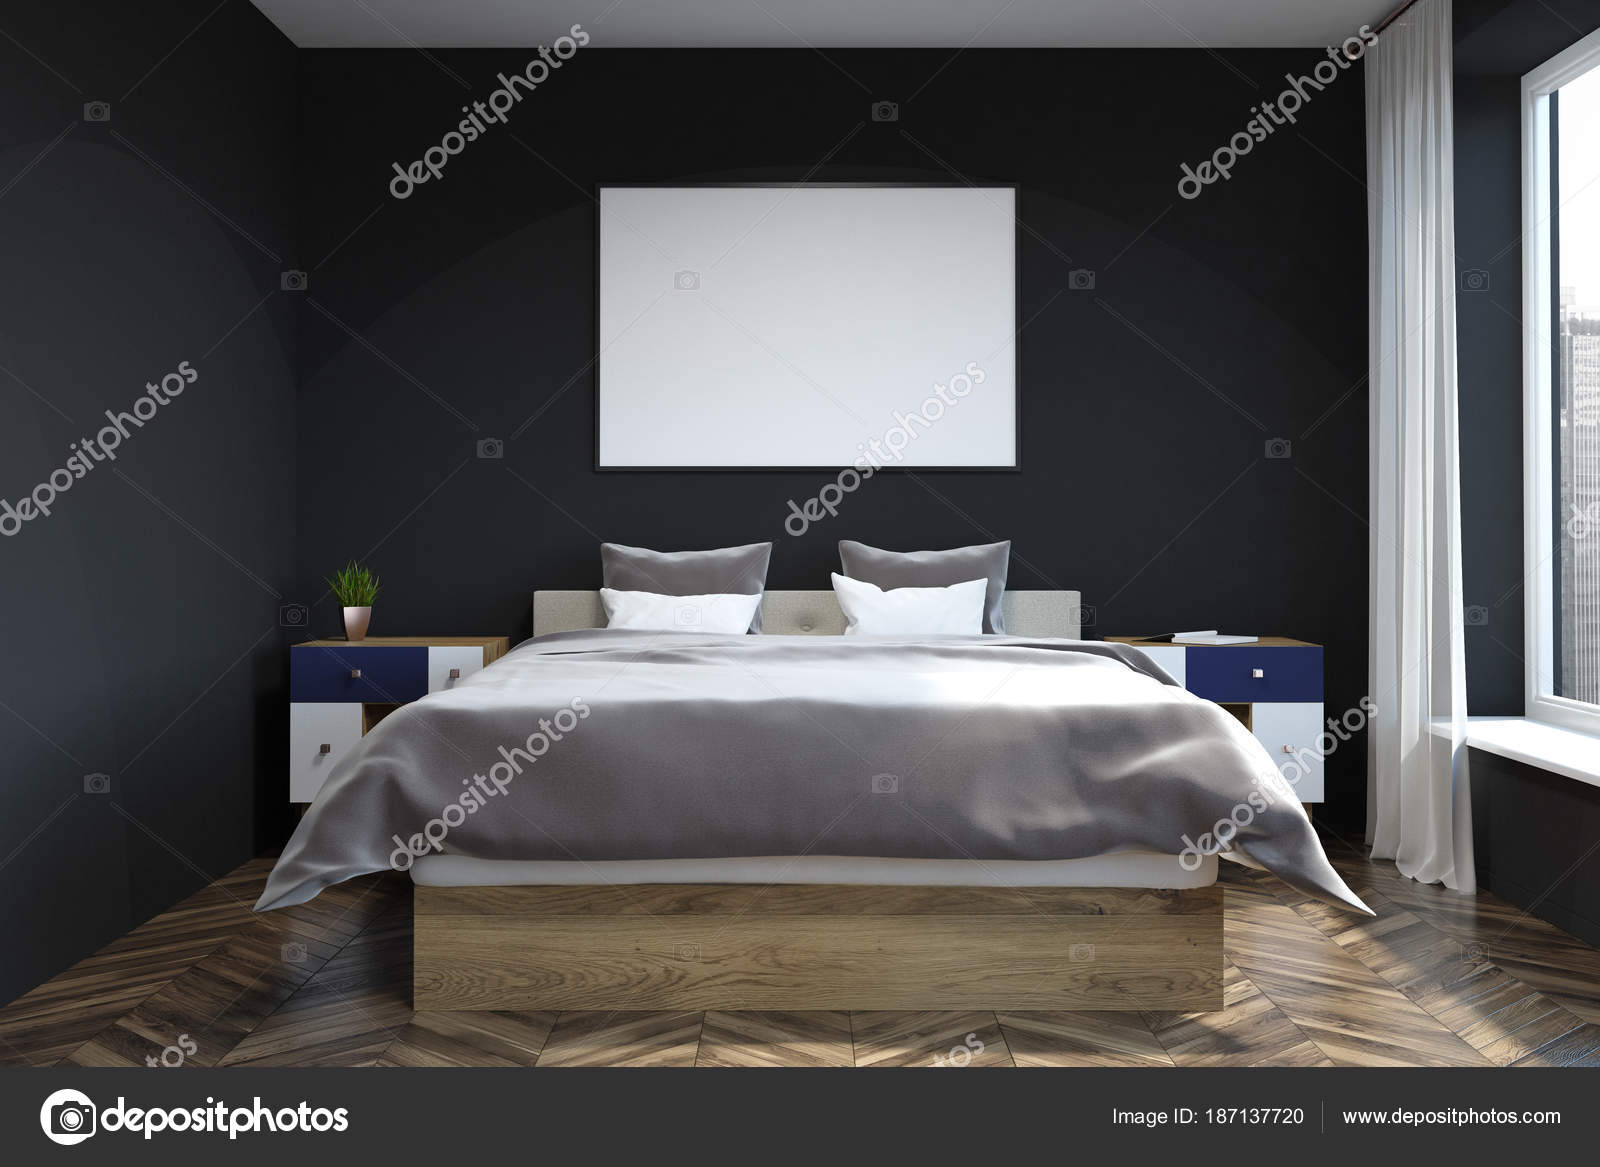 Black Wall Bedroom Interior Poster Stock Photo